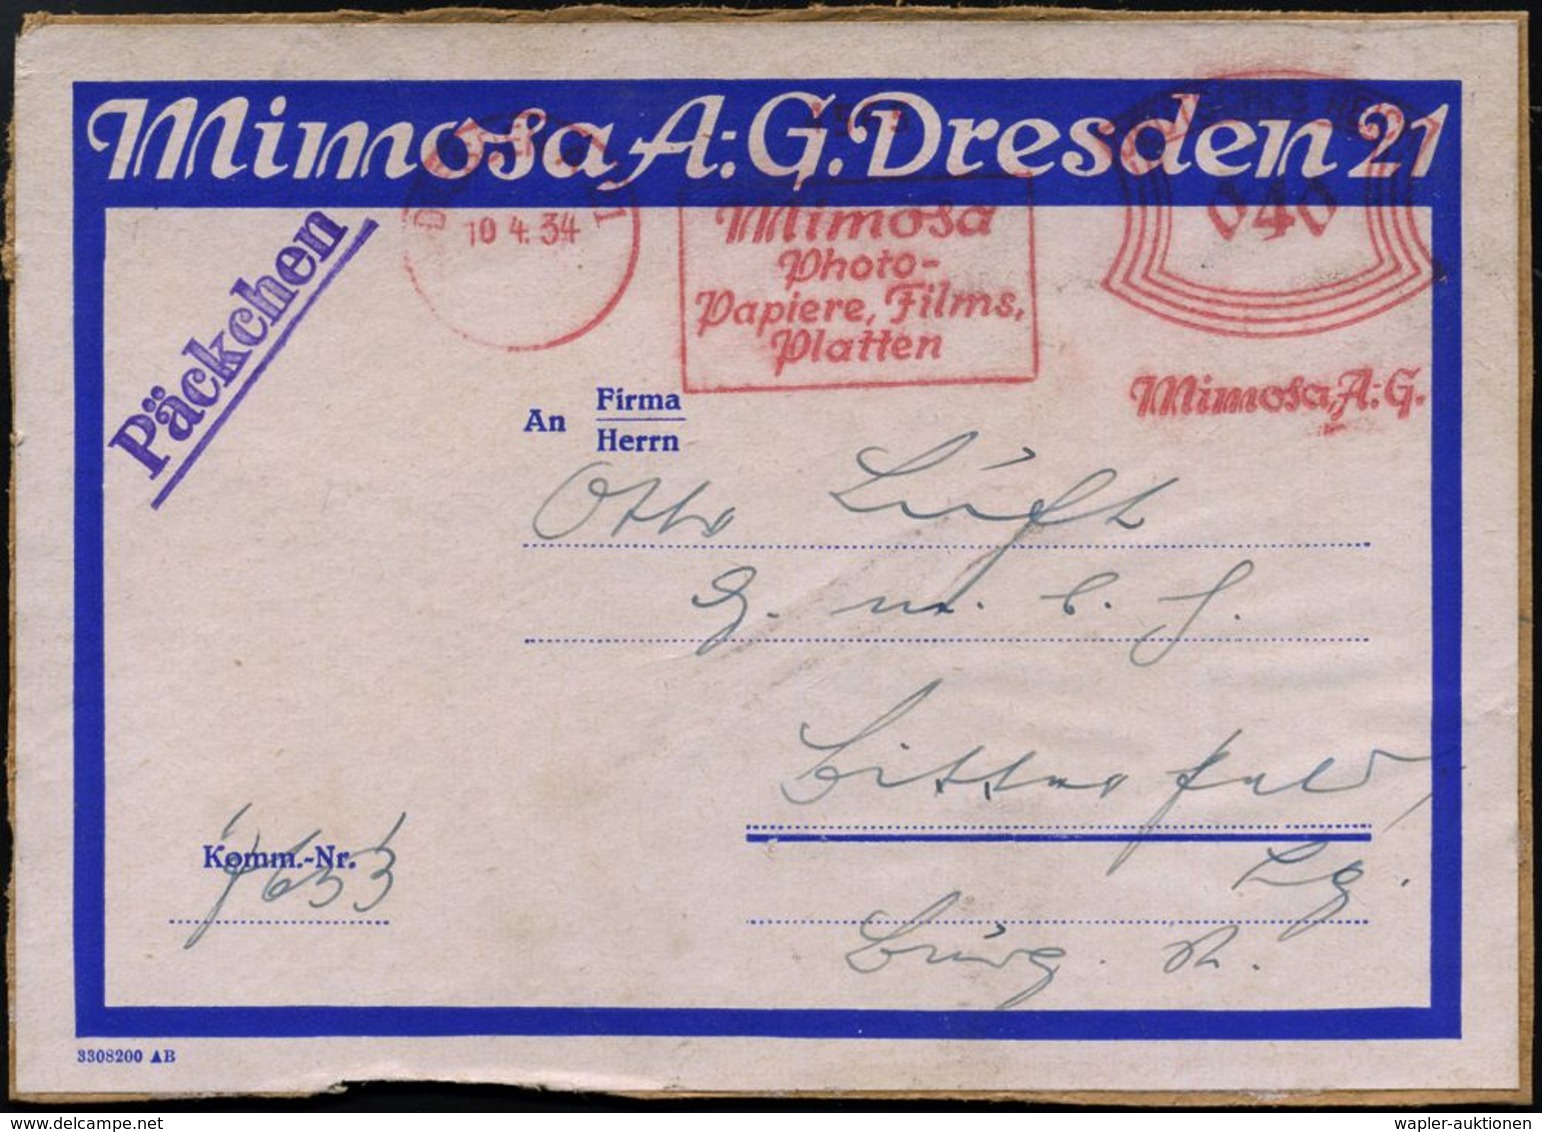 FOTOGRAFIE / KAMERAS / FOTOINDUSTRIE : DRESDEN A 21/ Mimosa/ Photo-/ Papiere,Films/ Platten.. 1934 (10.4.) AFS 040 Pf. A - Fotografia